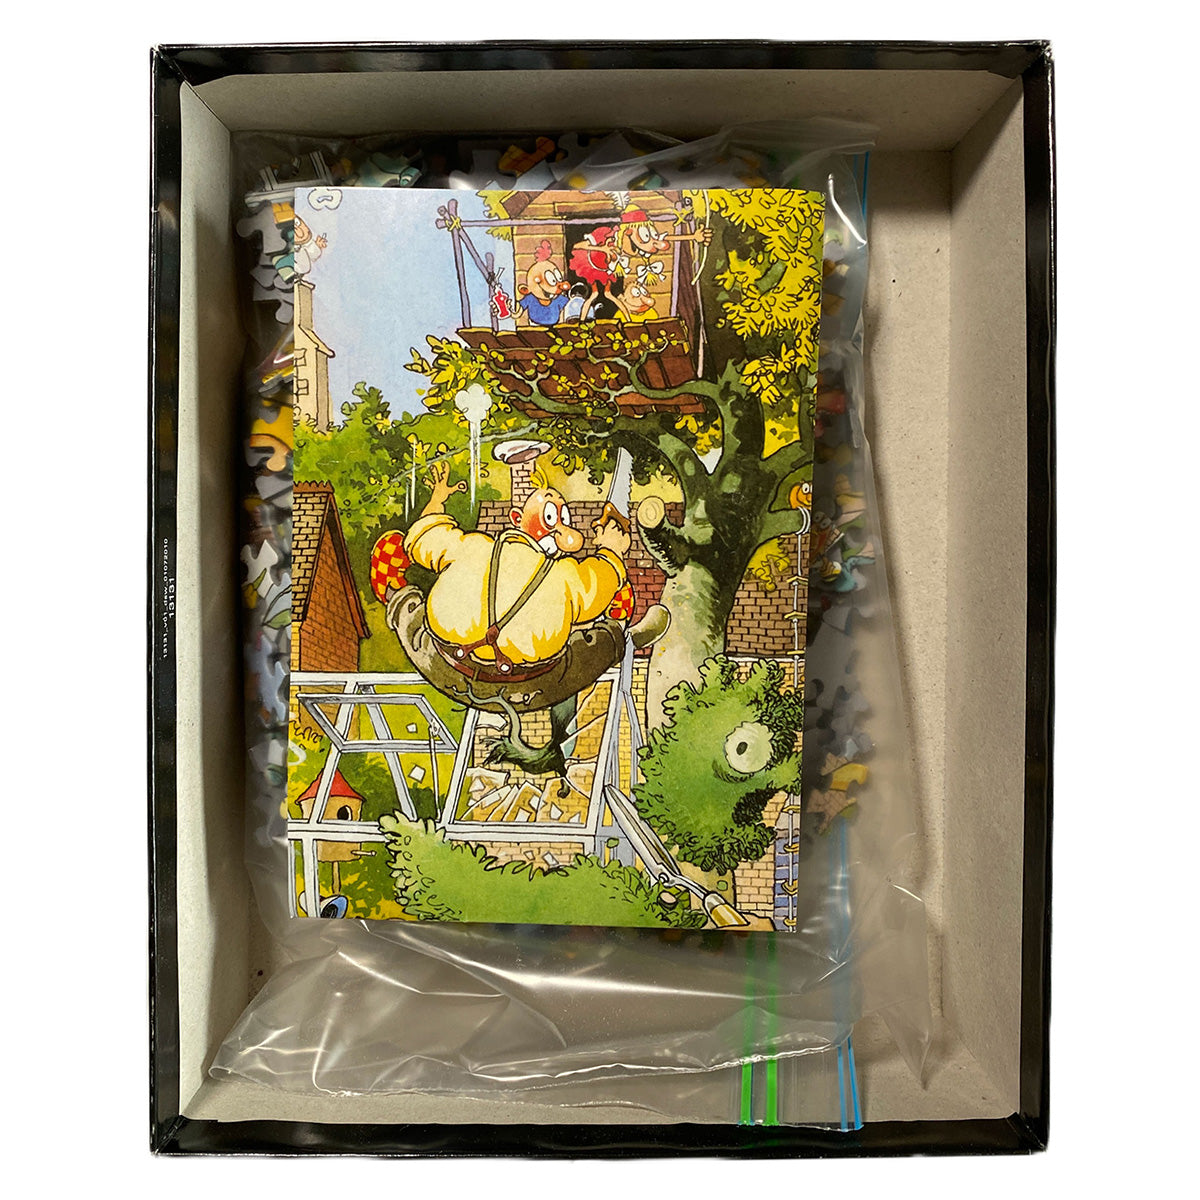 Photo of box of Wasgij 6 Blooming Marvellous Jumbo puzzle box inside.